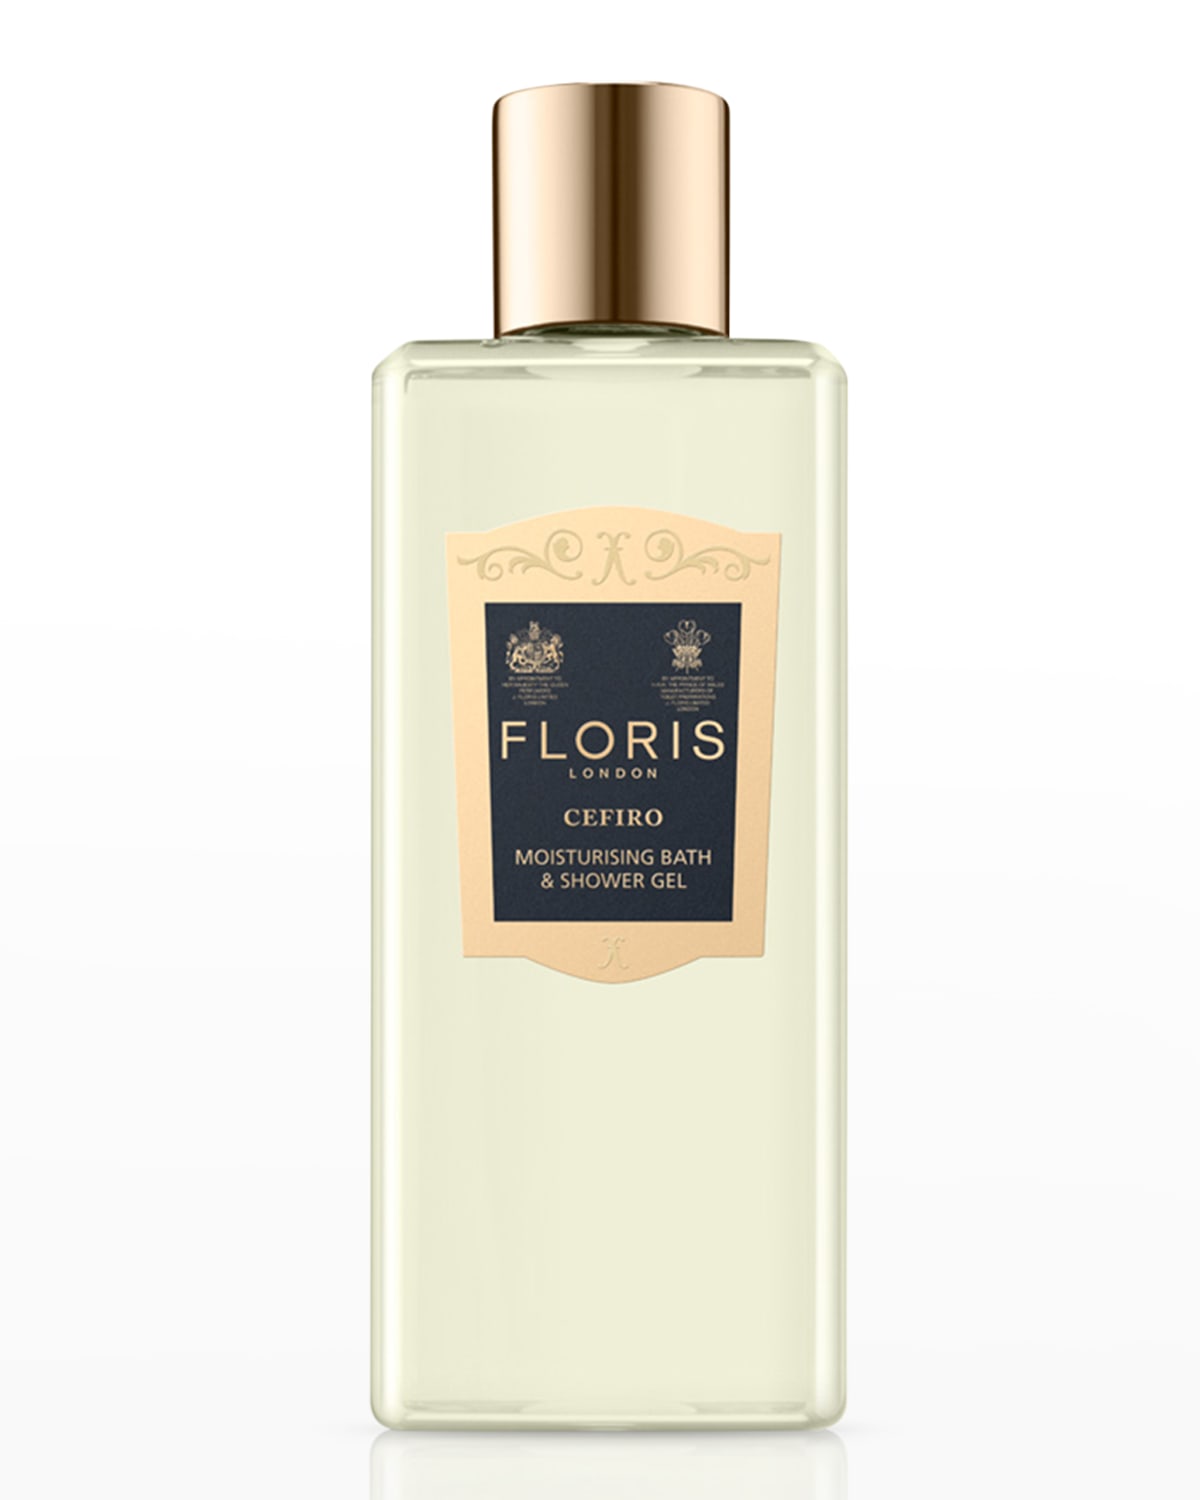 Floris London 8.4 oz. Cefiro Moisturizing Bath & Shower Gel